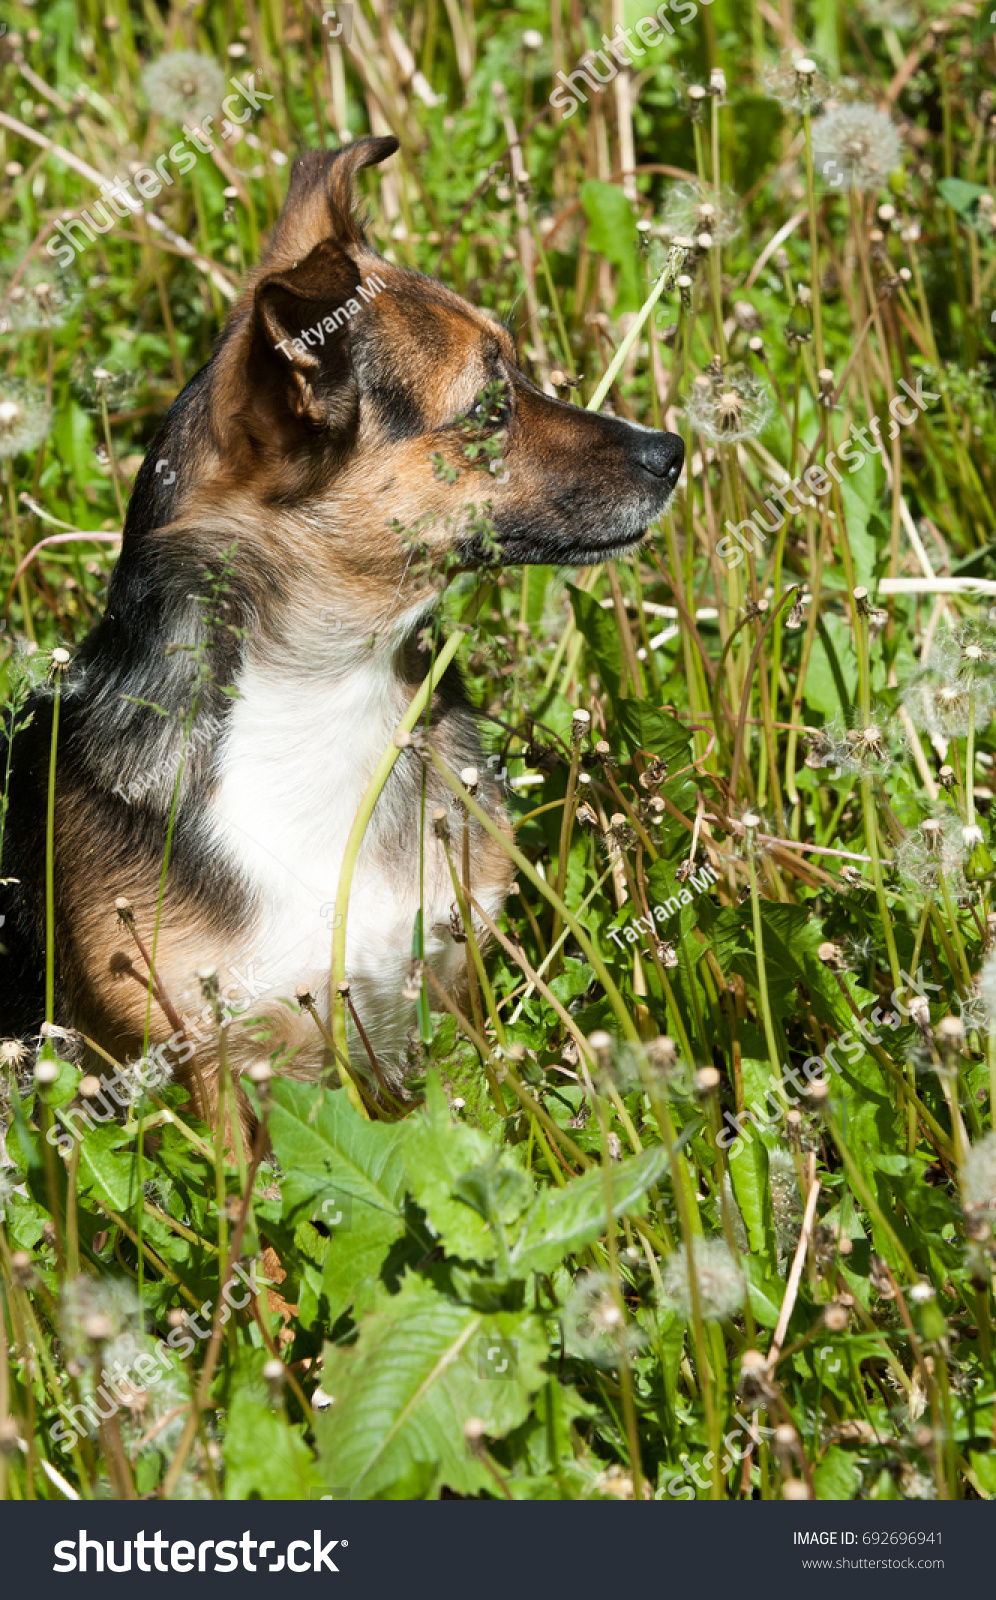 Summer Landscape Dog Family Friend Dog Stock Photo Edit Now 692696941